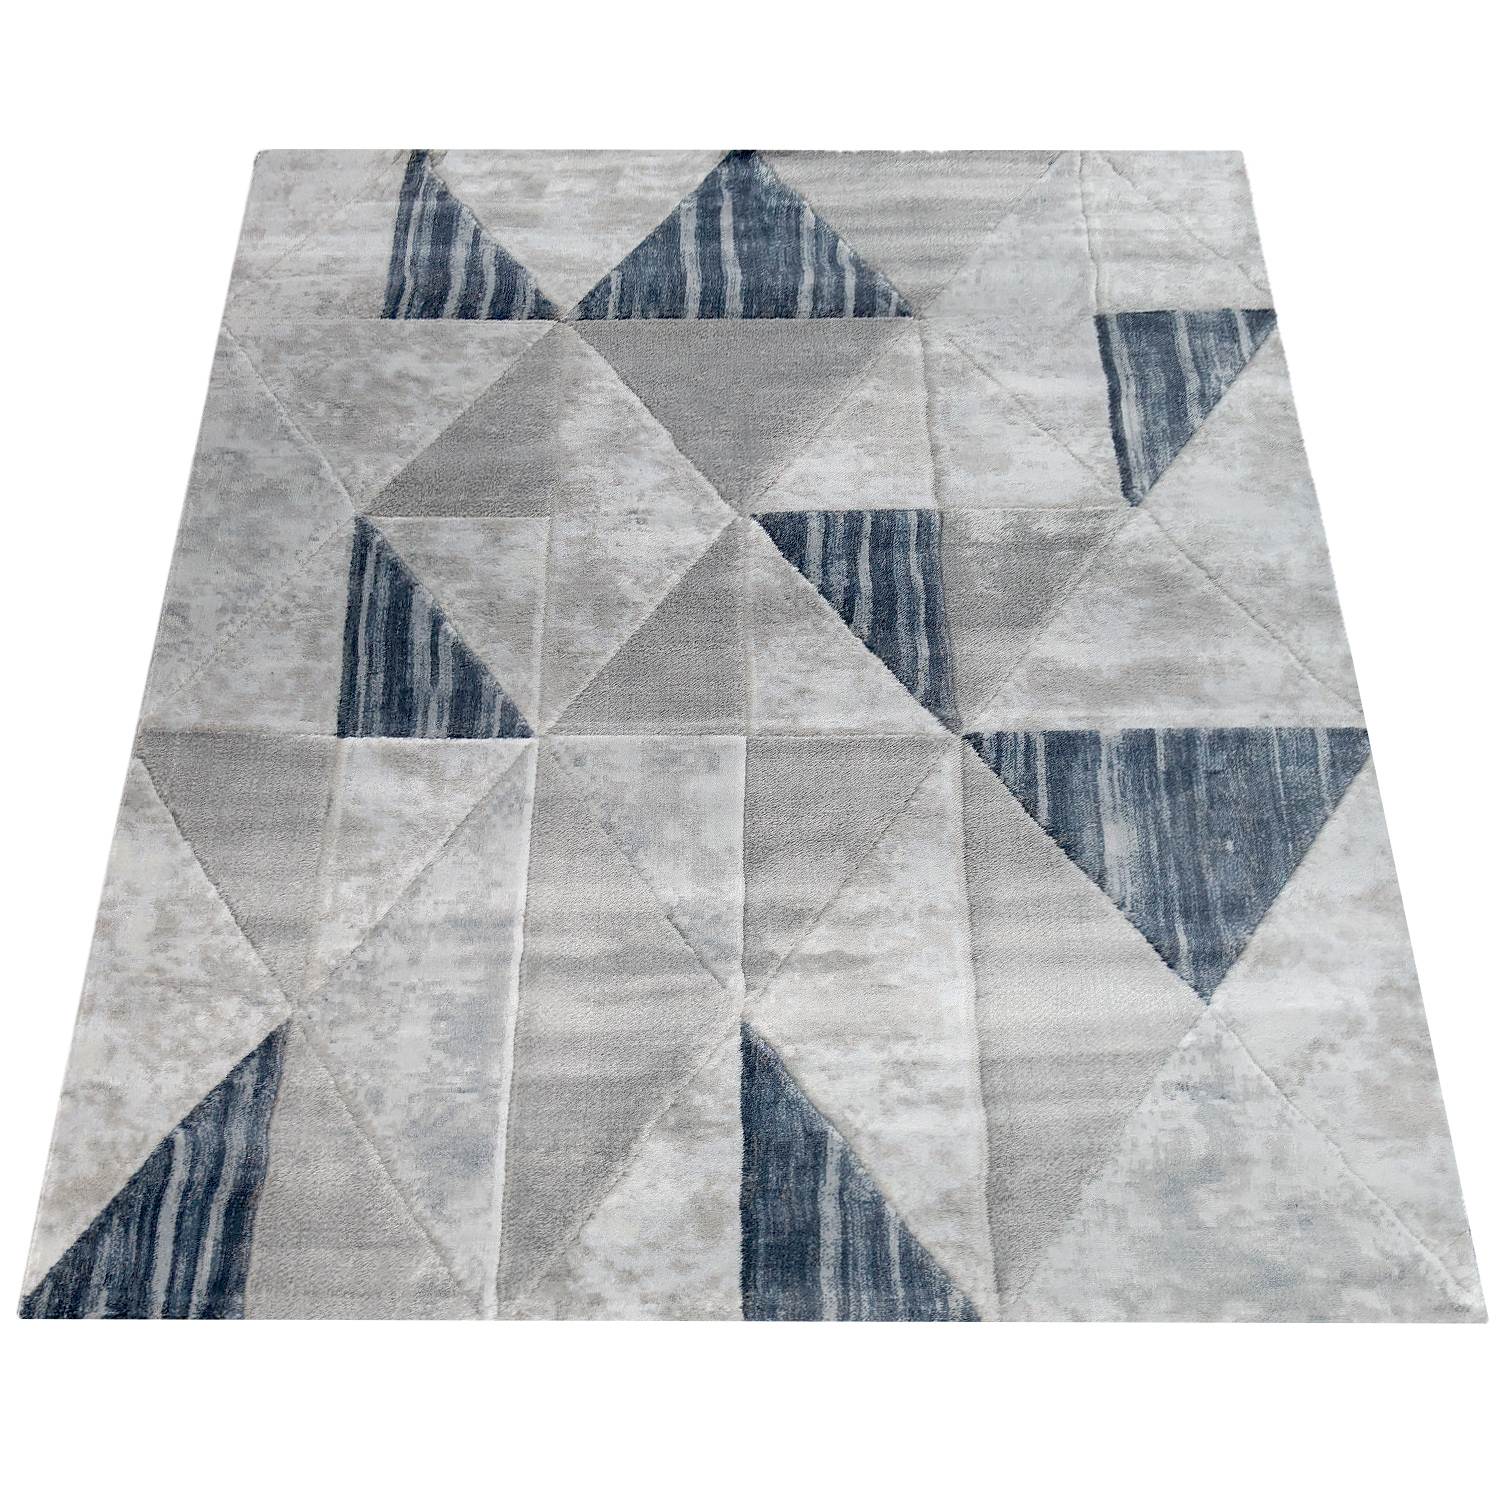 Vintage Teppich Modern Rauten Muster Ombre Look Blau 